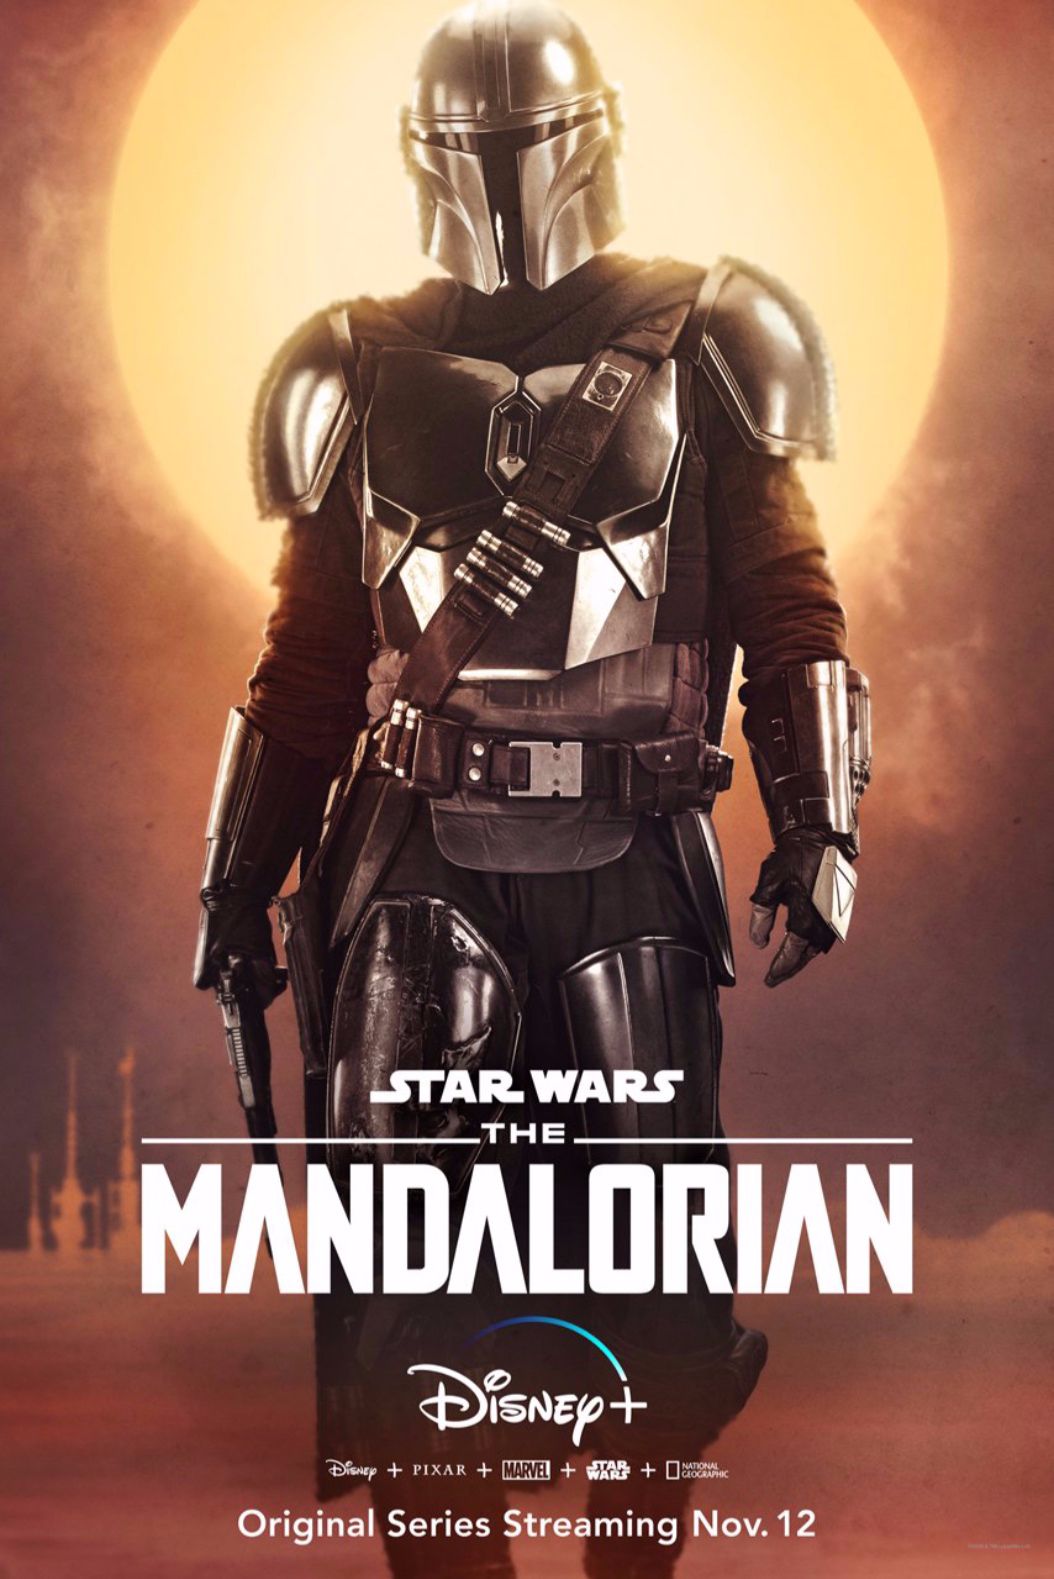 The Mandalorian Character Poster #1